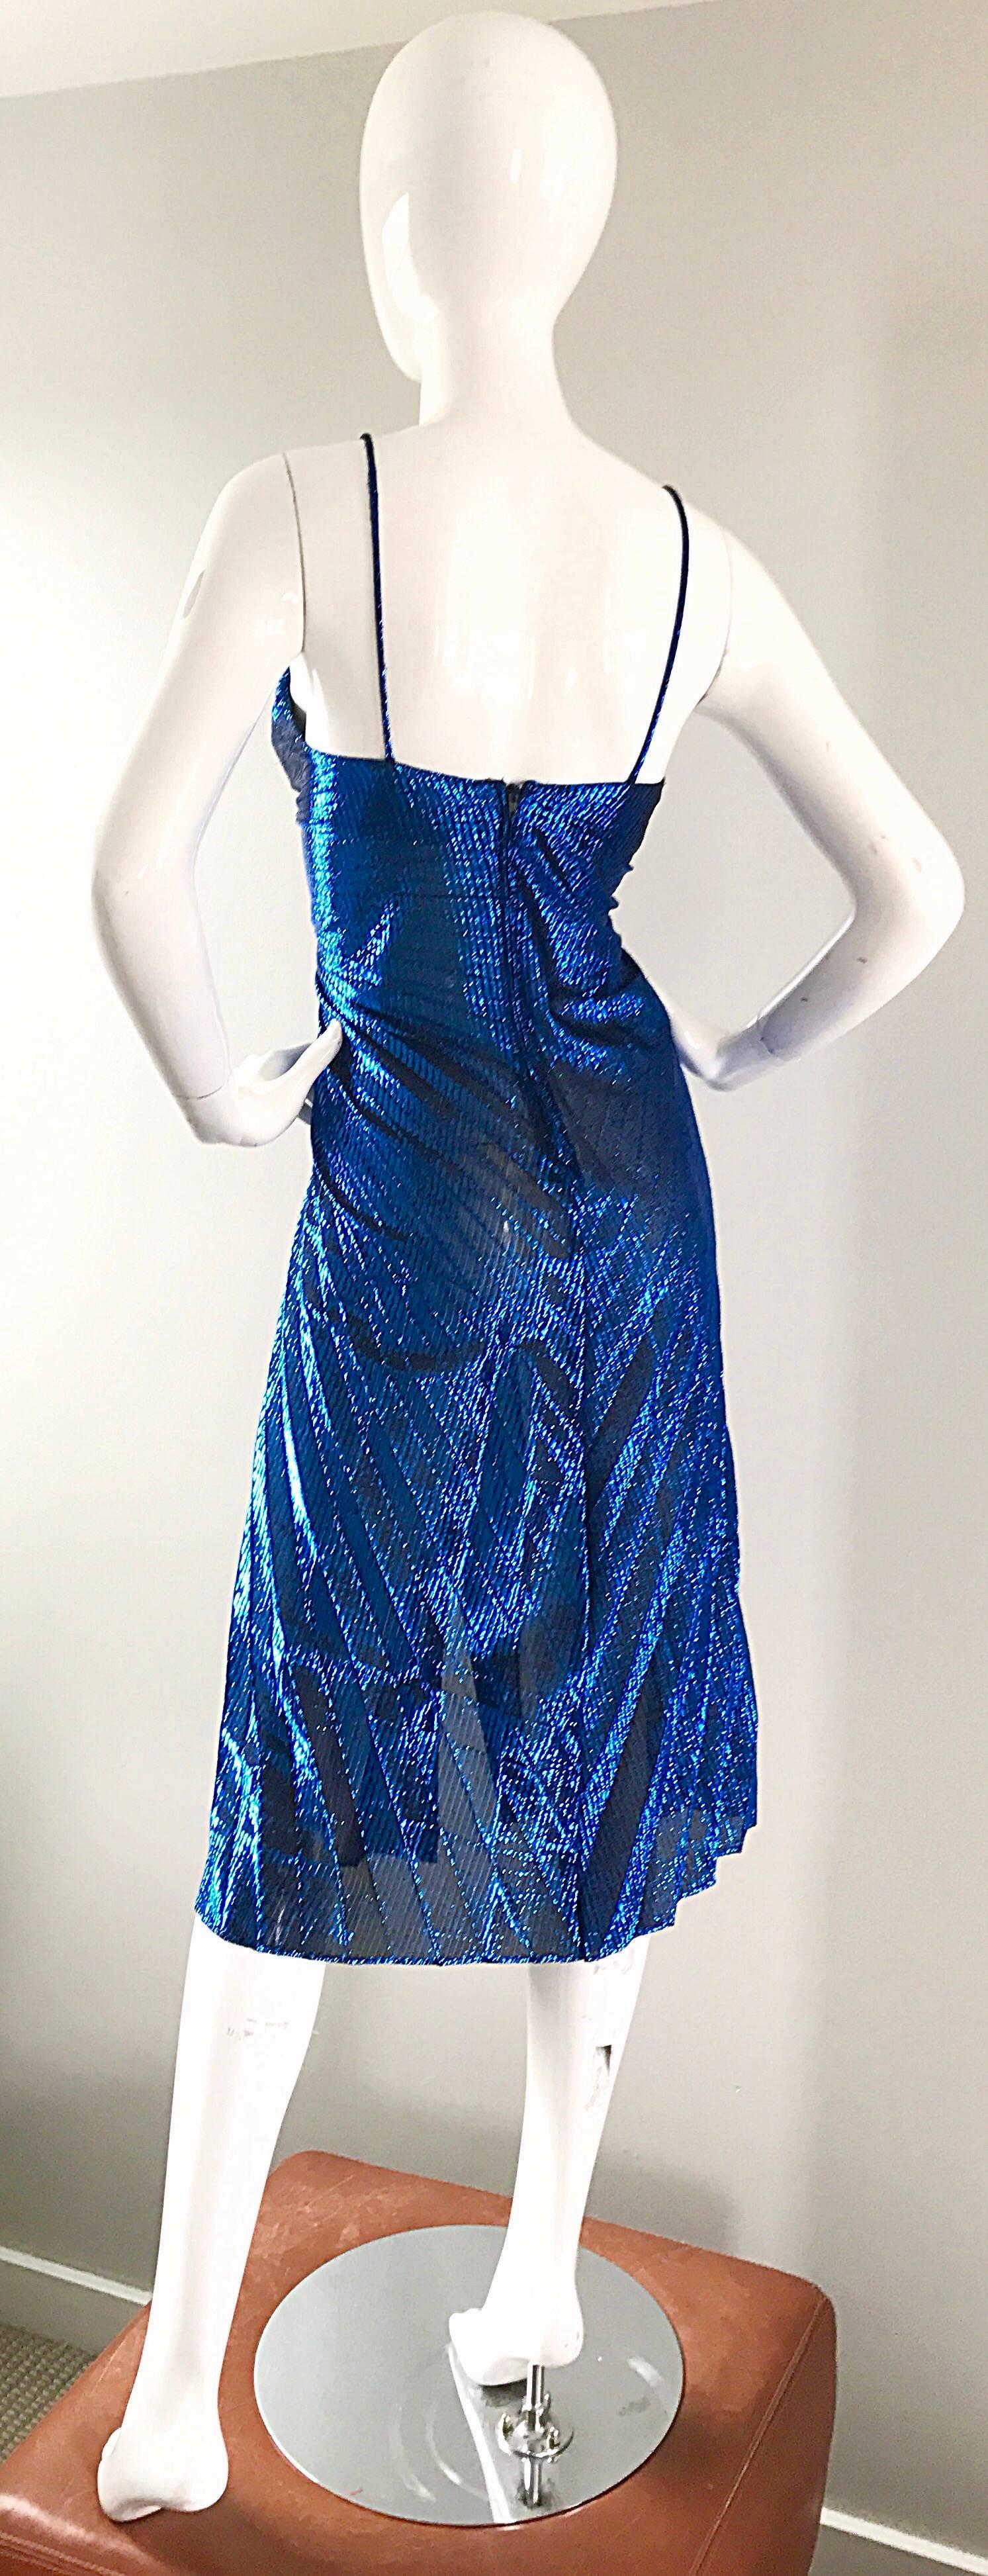 metallic blue dress